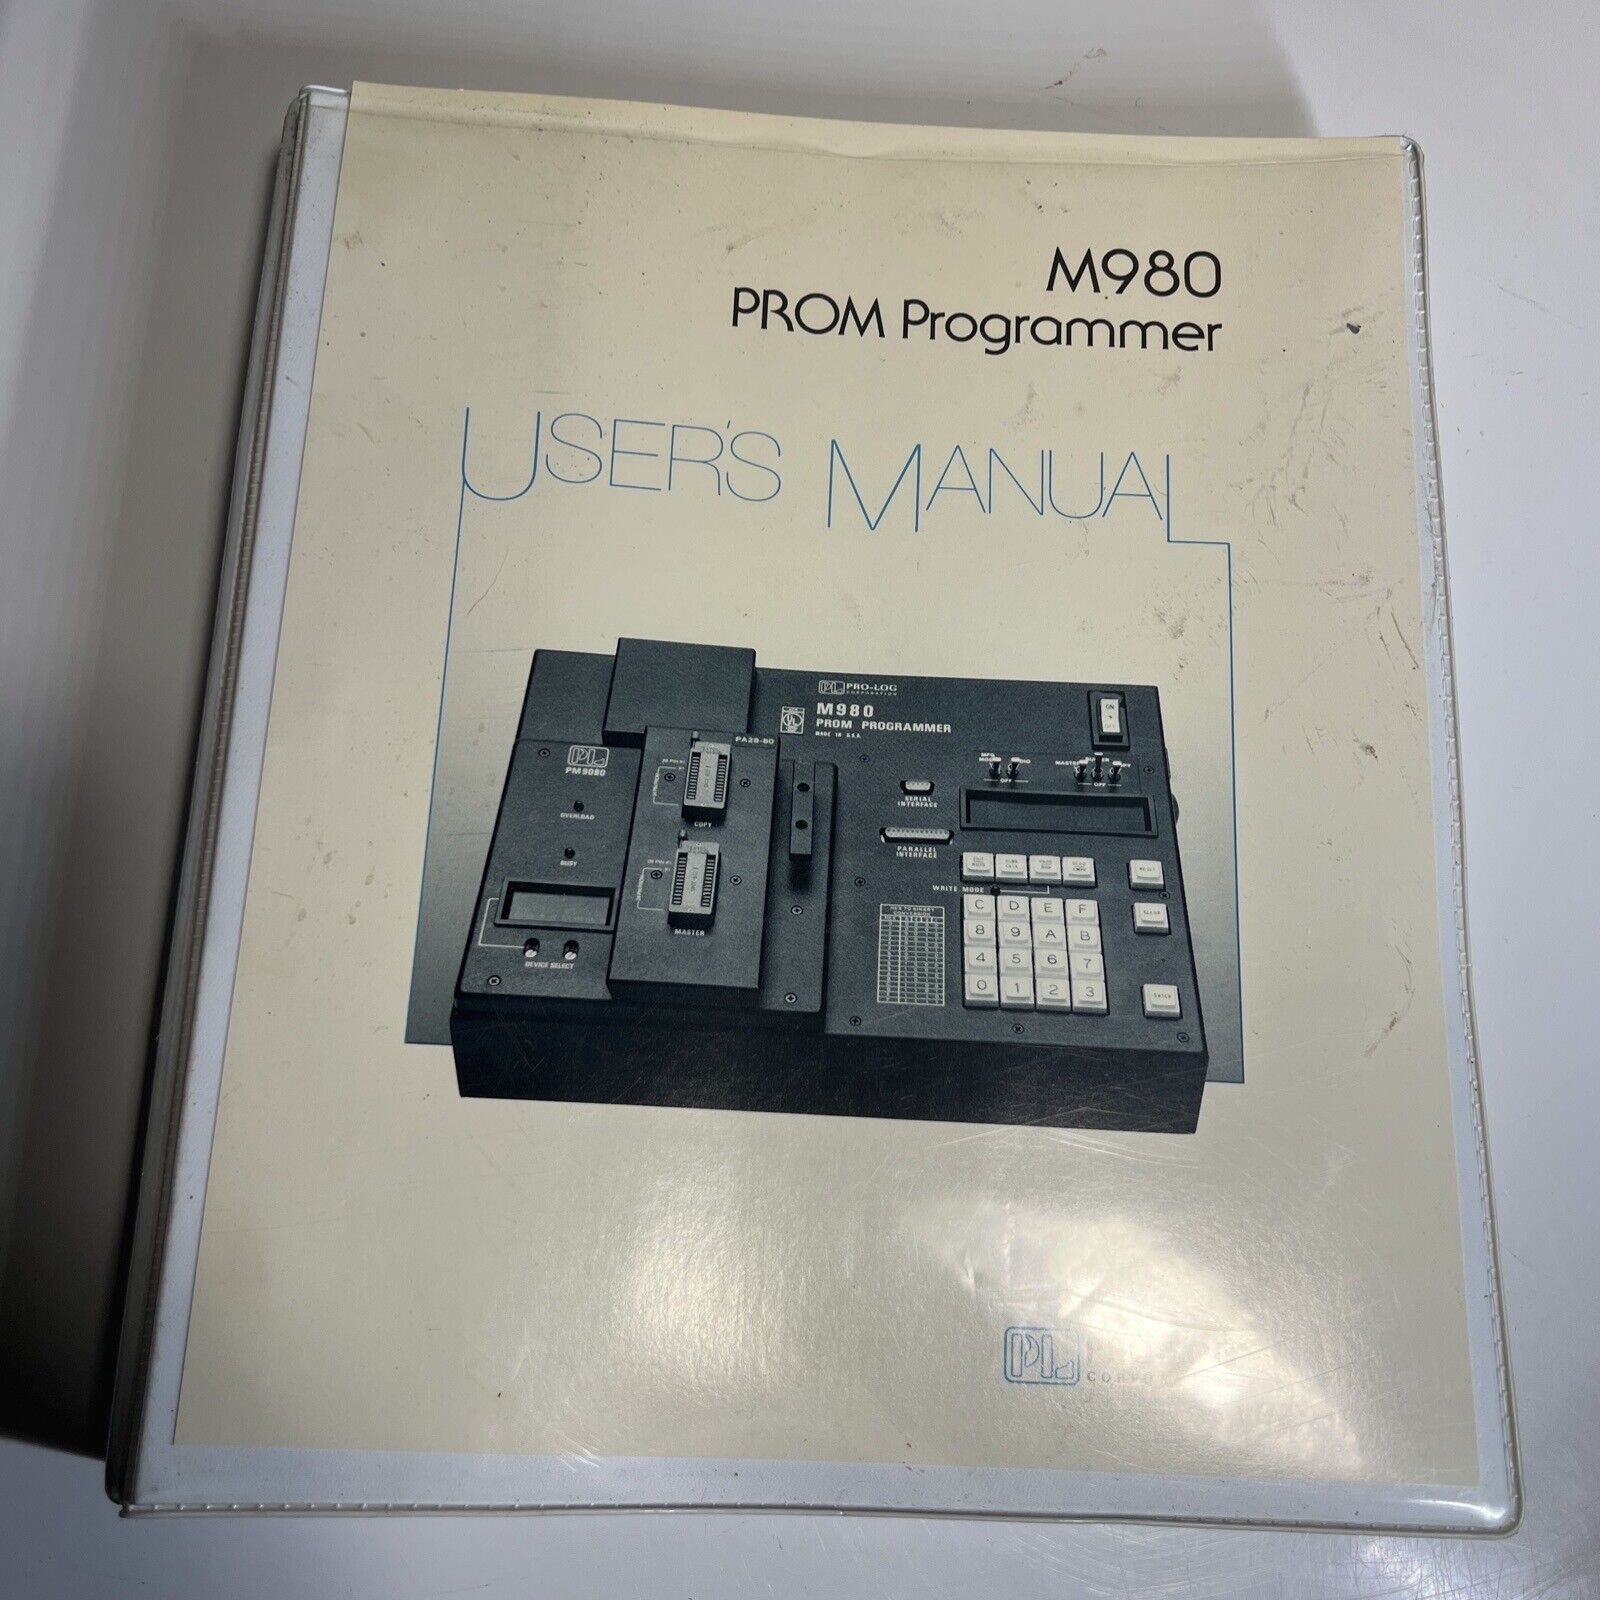 Vintage Pro-Log M980 Prom Programmer USERS MANUAL